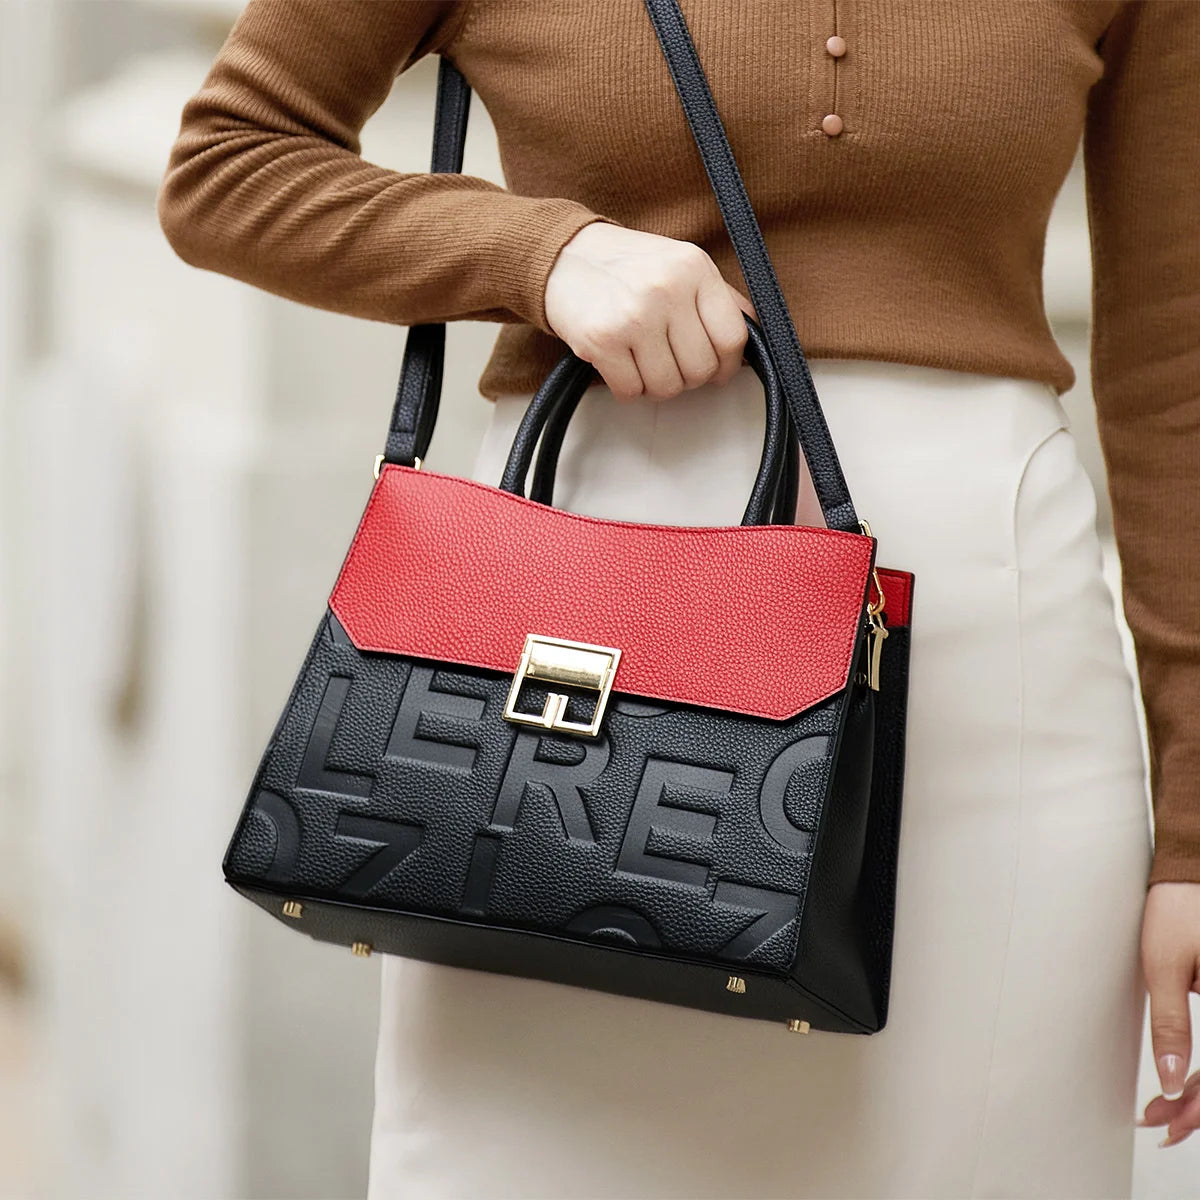 KIMLUD, ZOOLER 100% Genuine Leather Women's Handbags Red Cover Black Body Shoulder Messenger Bags Skin  Ladies Purses Winter#YC355, Black- Red, KIMLUD Women's Clothes